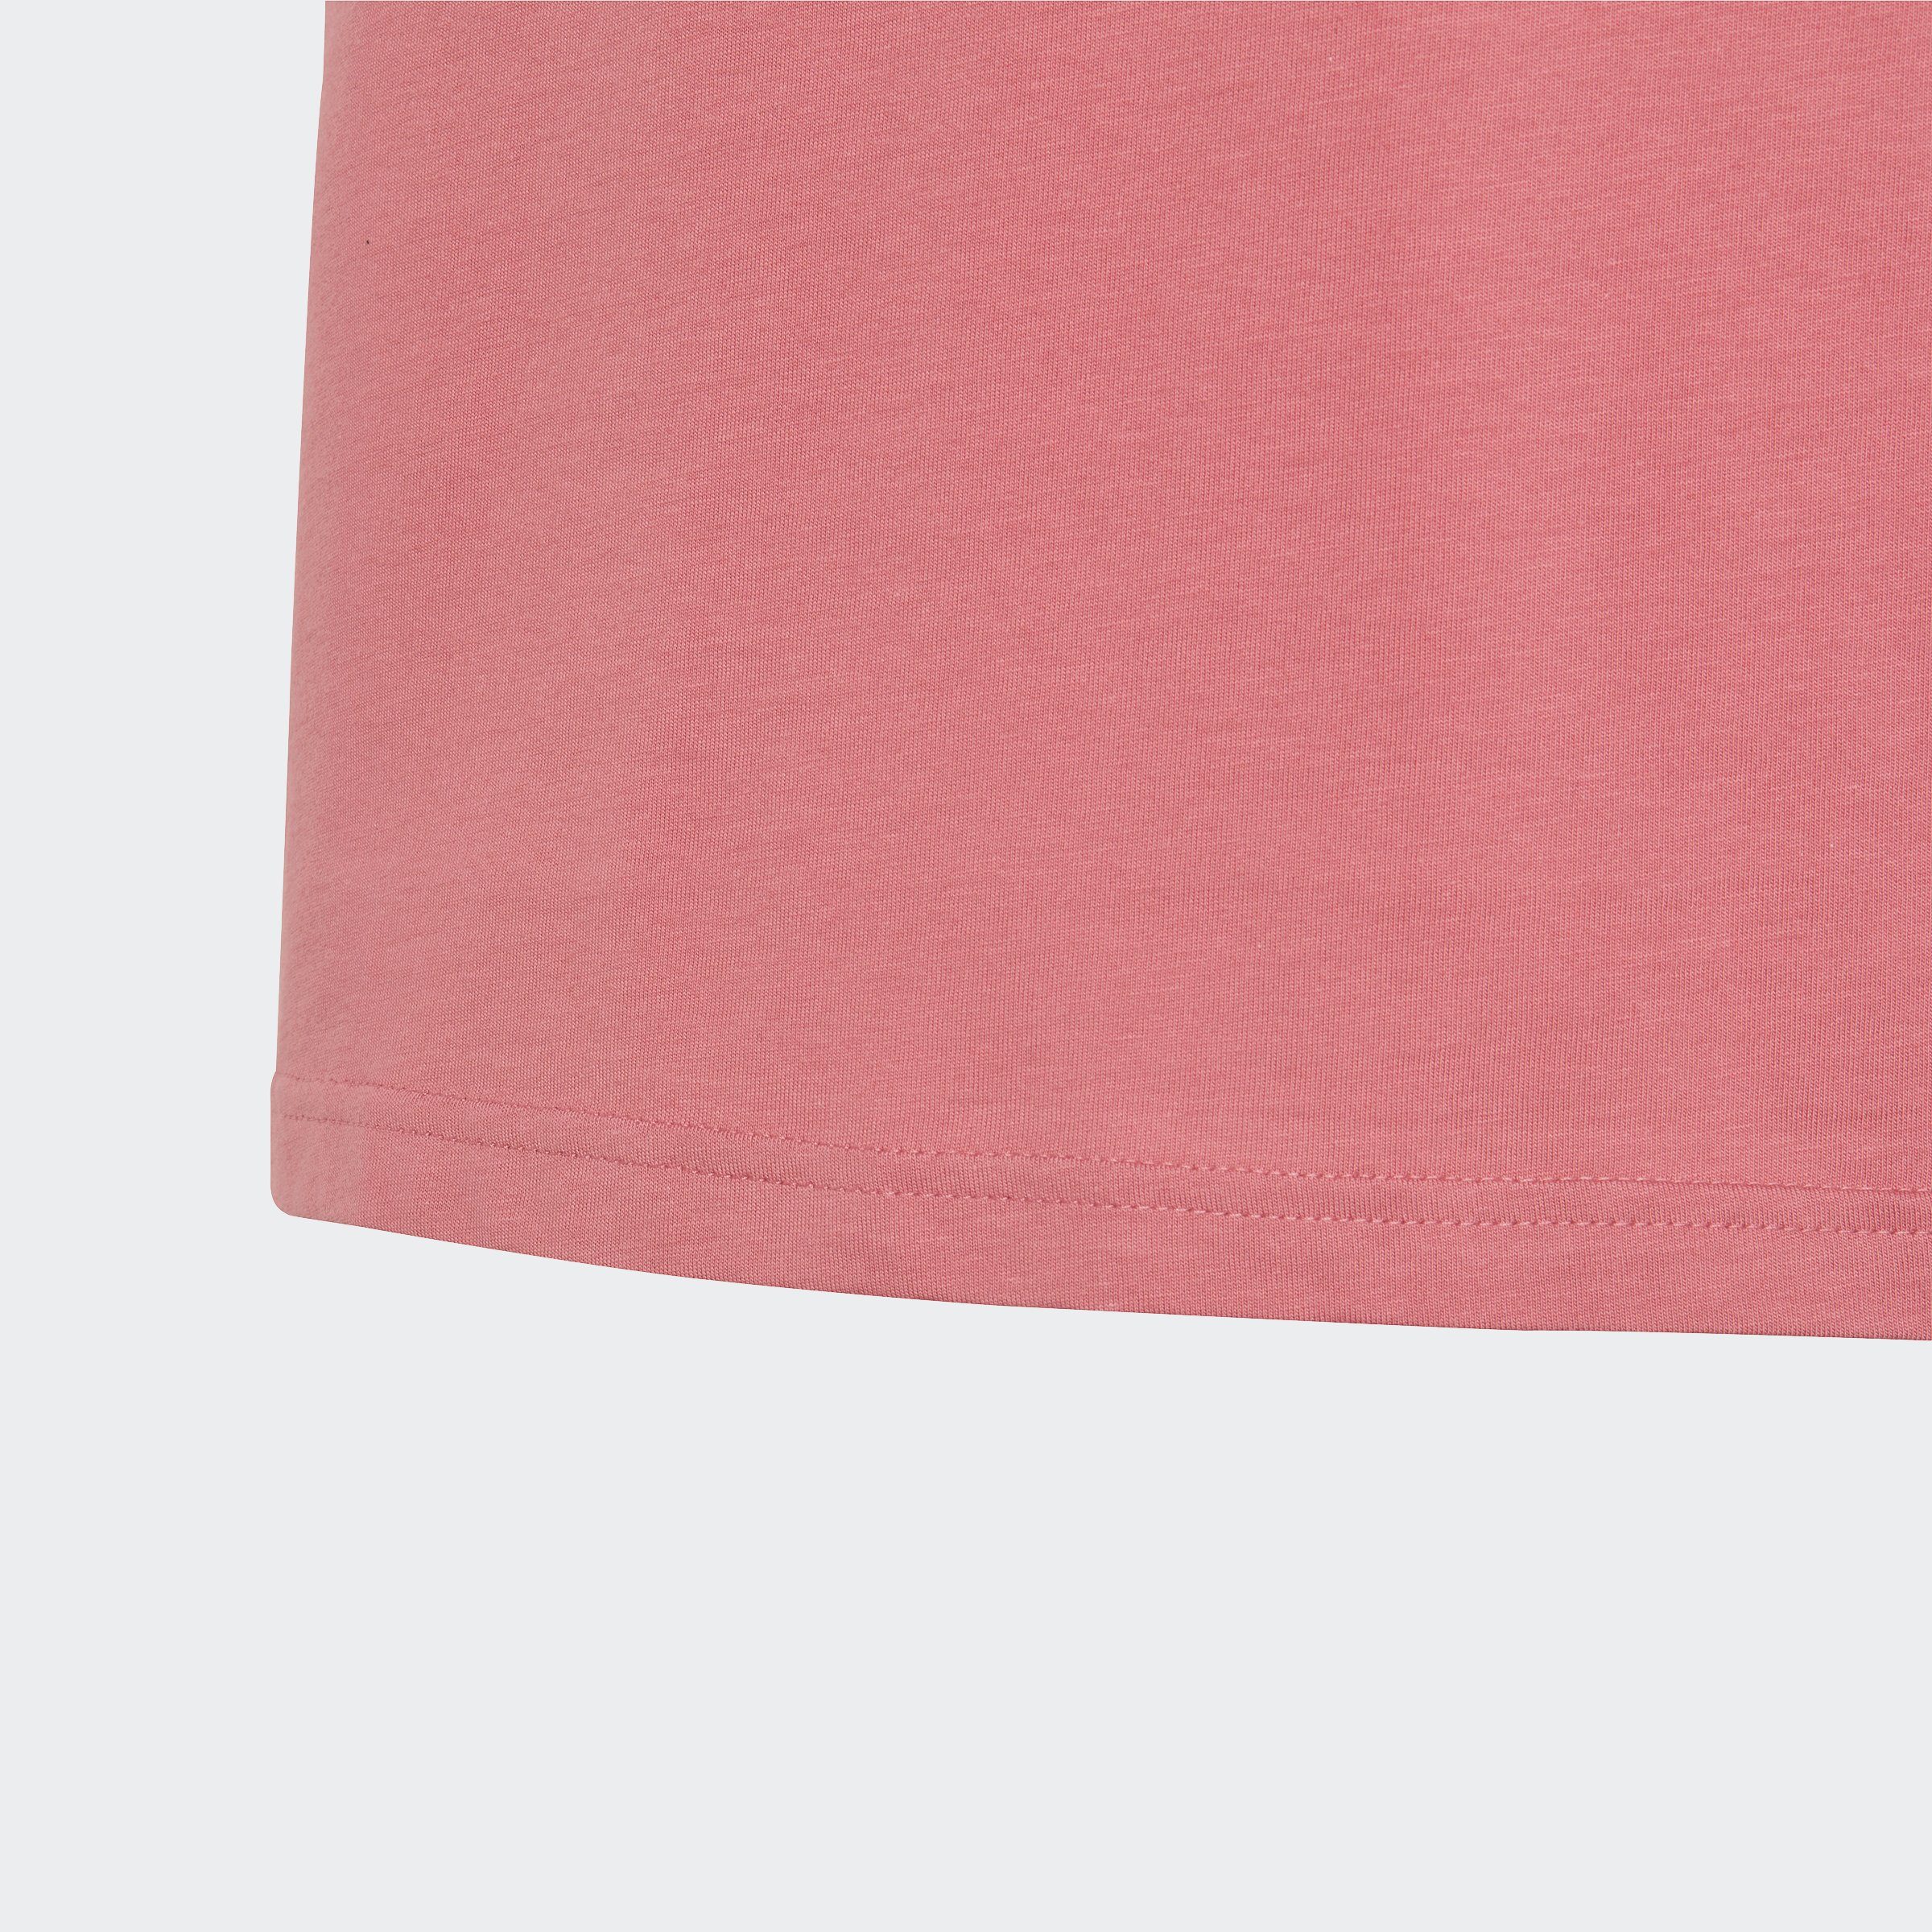 TEE adidas Originals T-Shirt Pink Strata